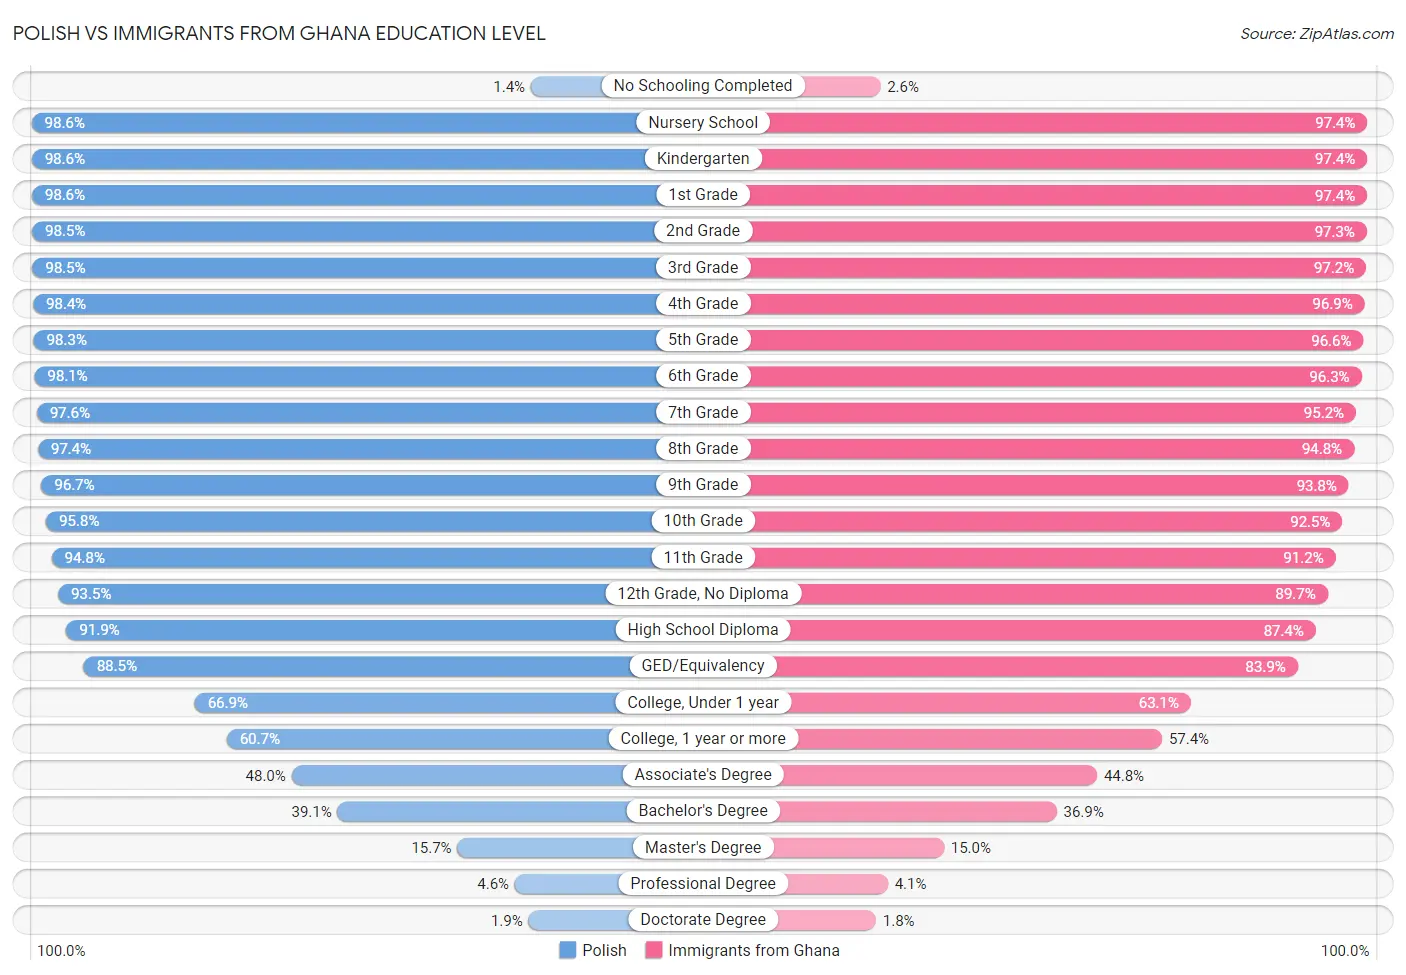 Polish vs Immigrants from Ghana Education Level